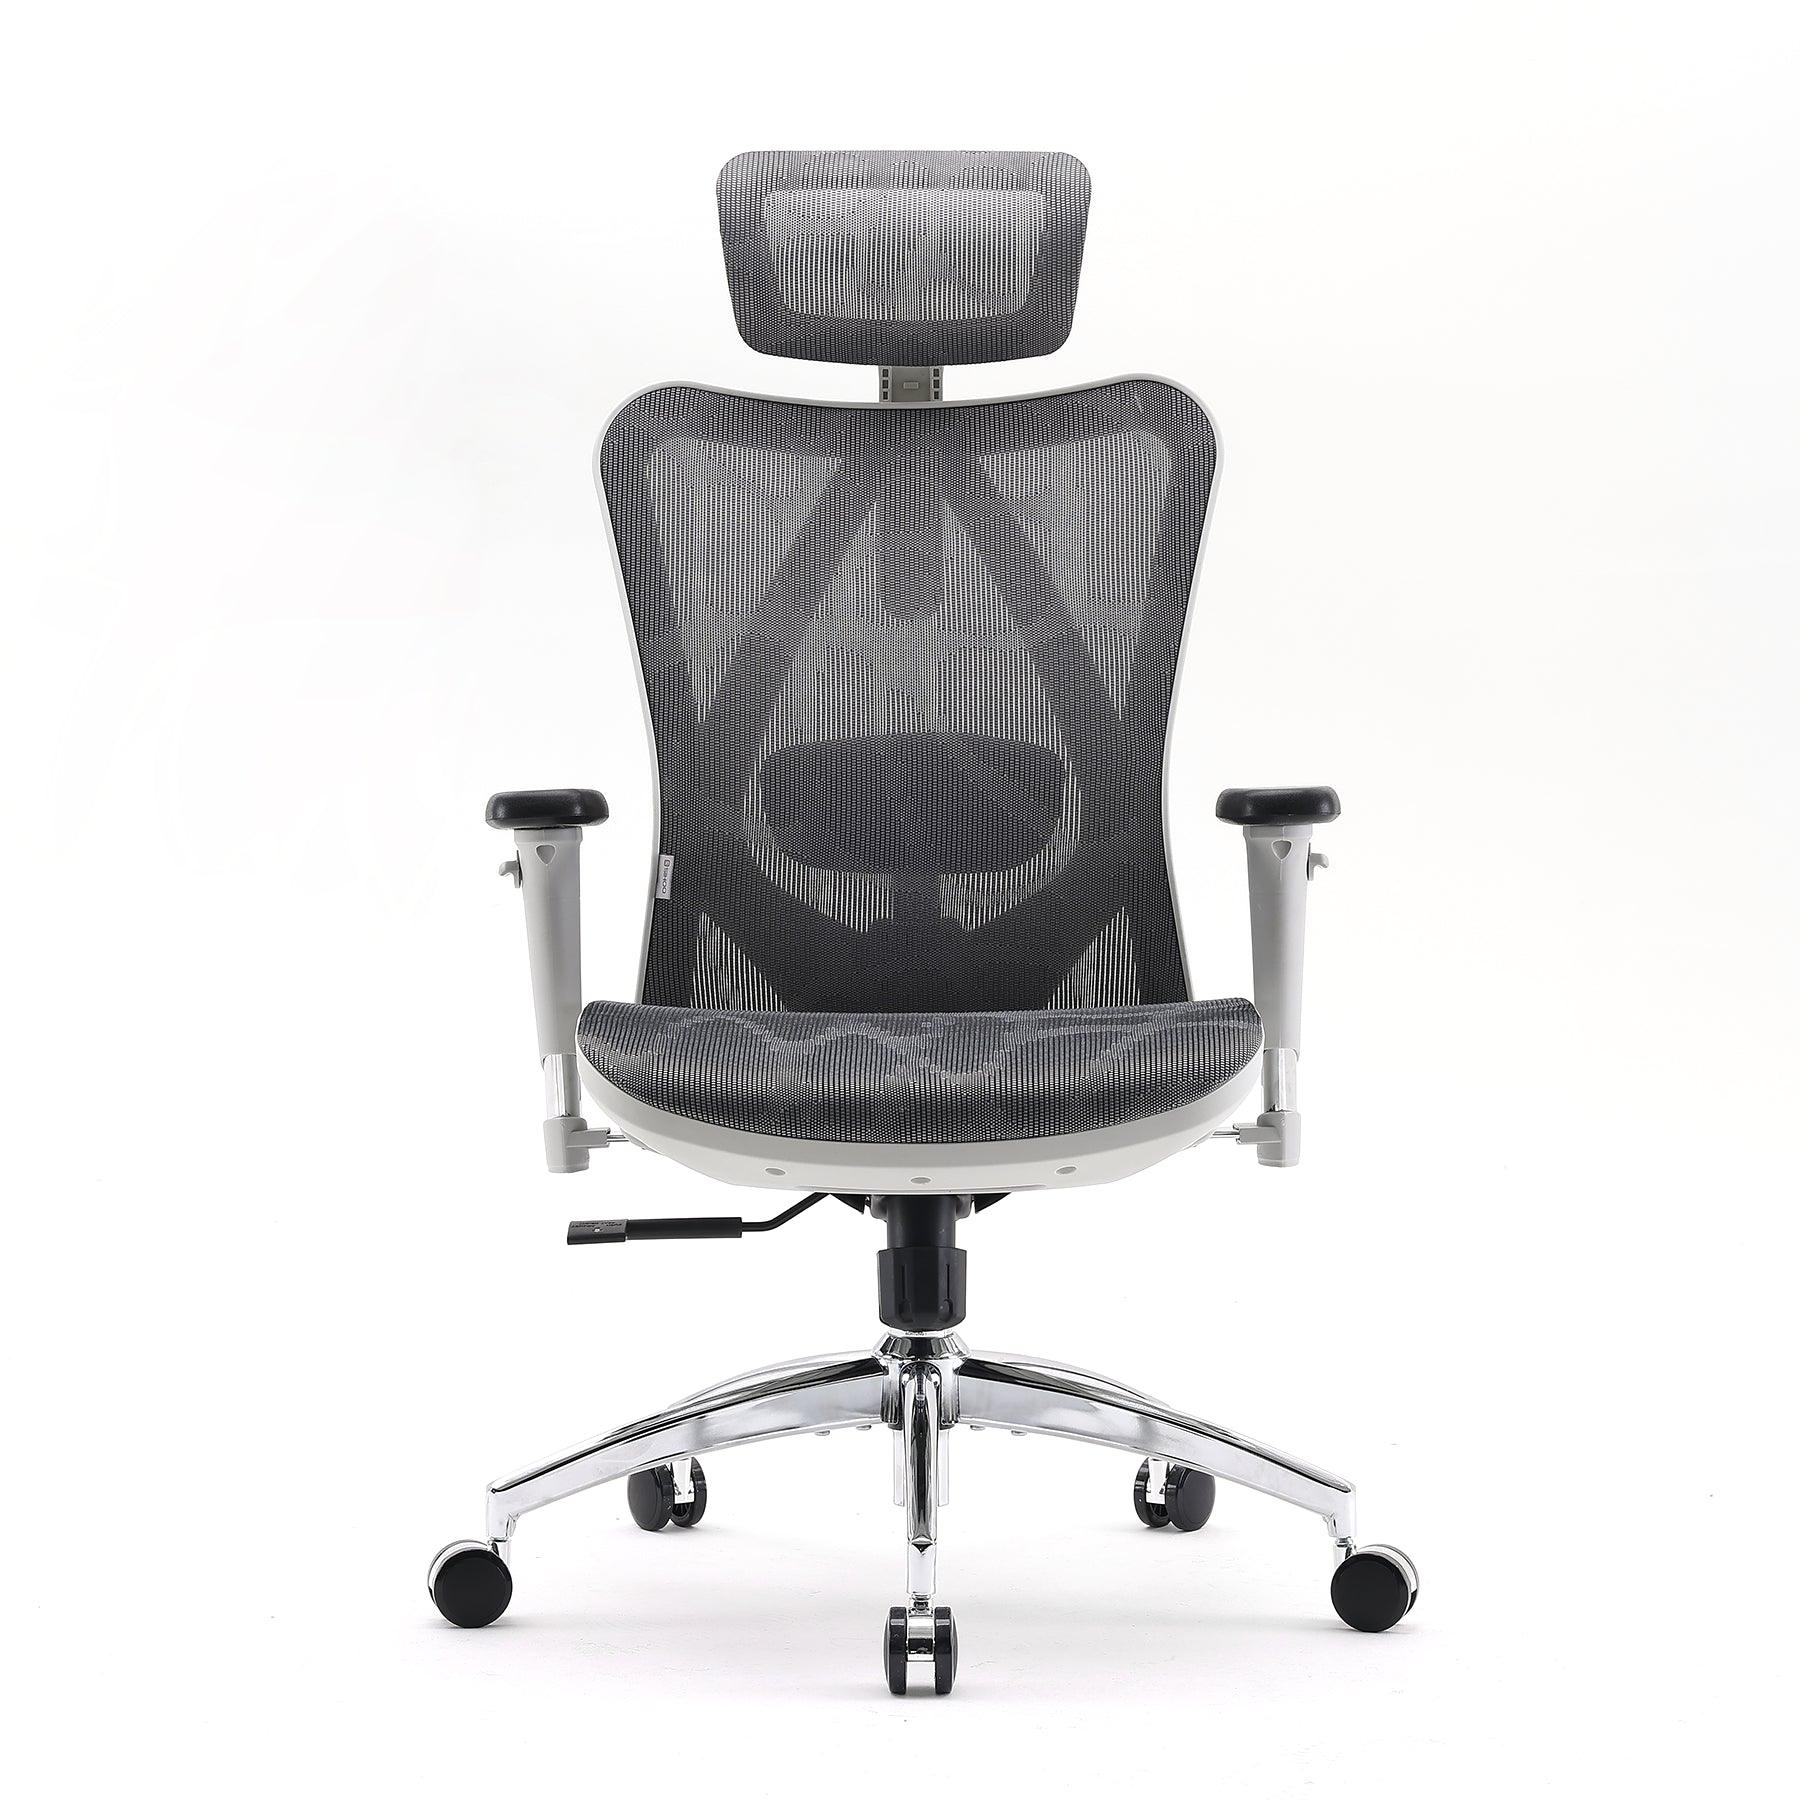 SIHOO M57 Ergonomic Office Desk Chair Computer Chair - Black